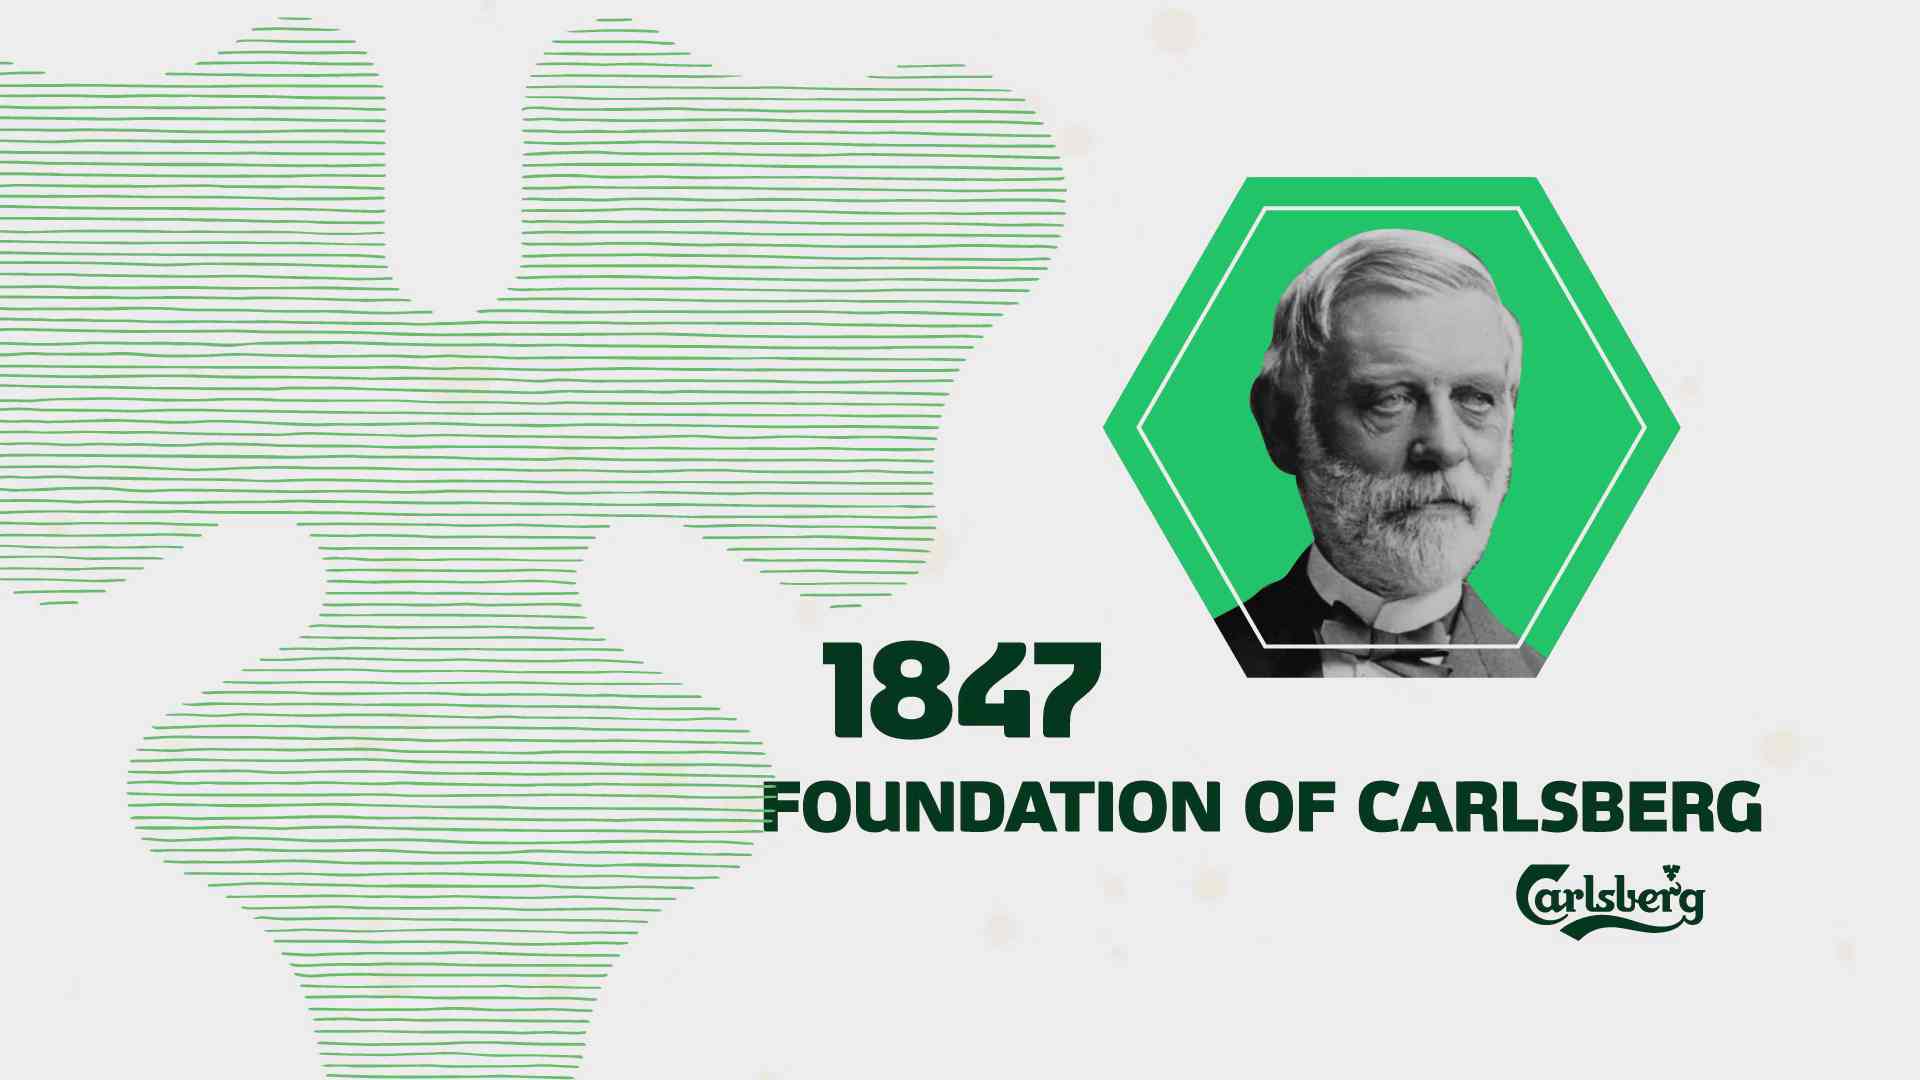 1847 - foundation of Carlsberg